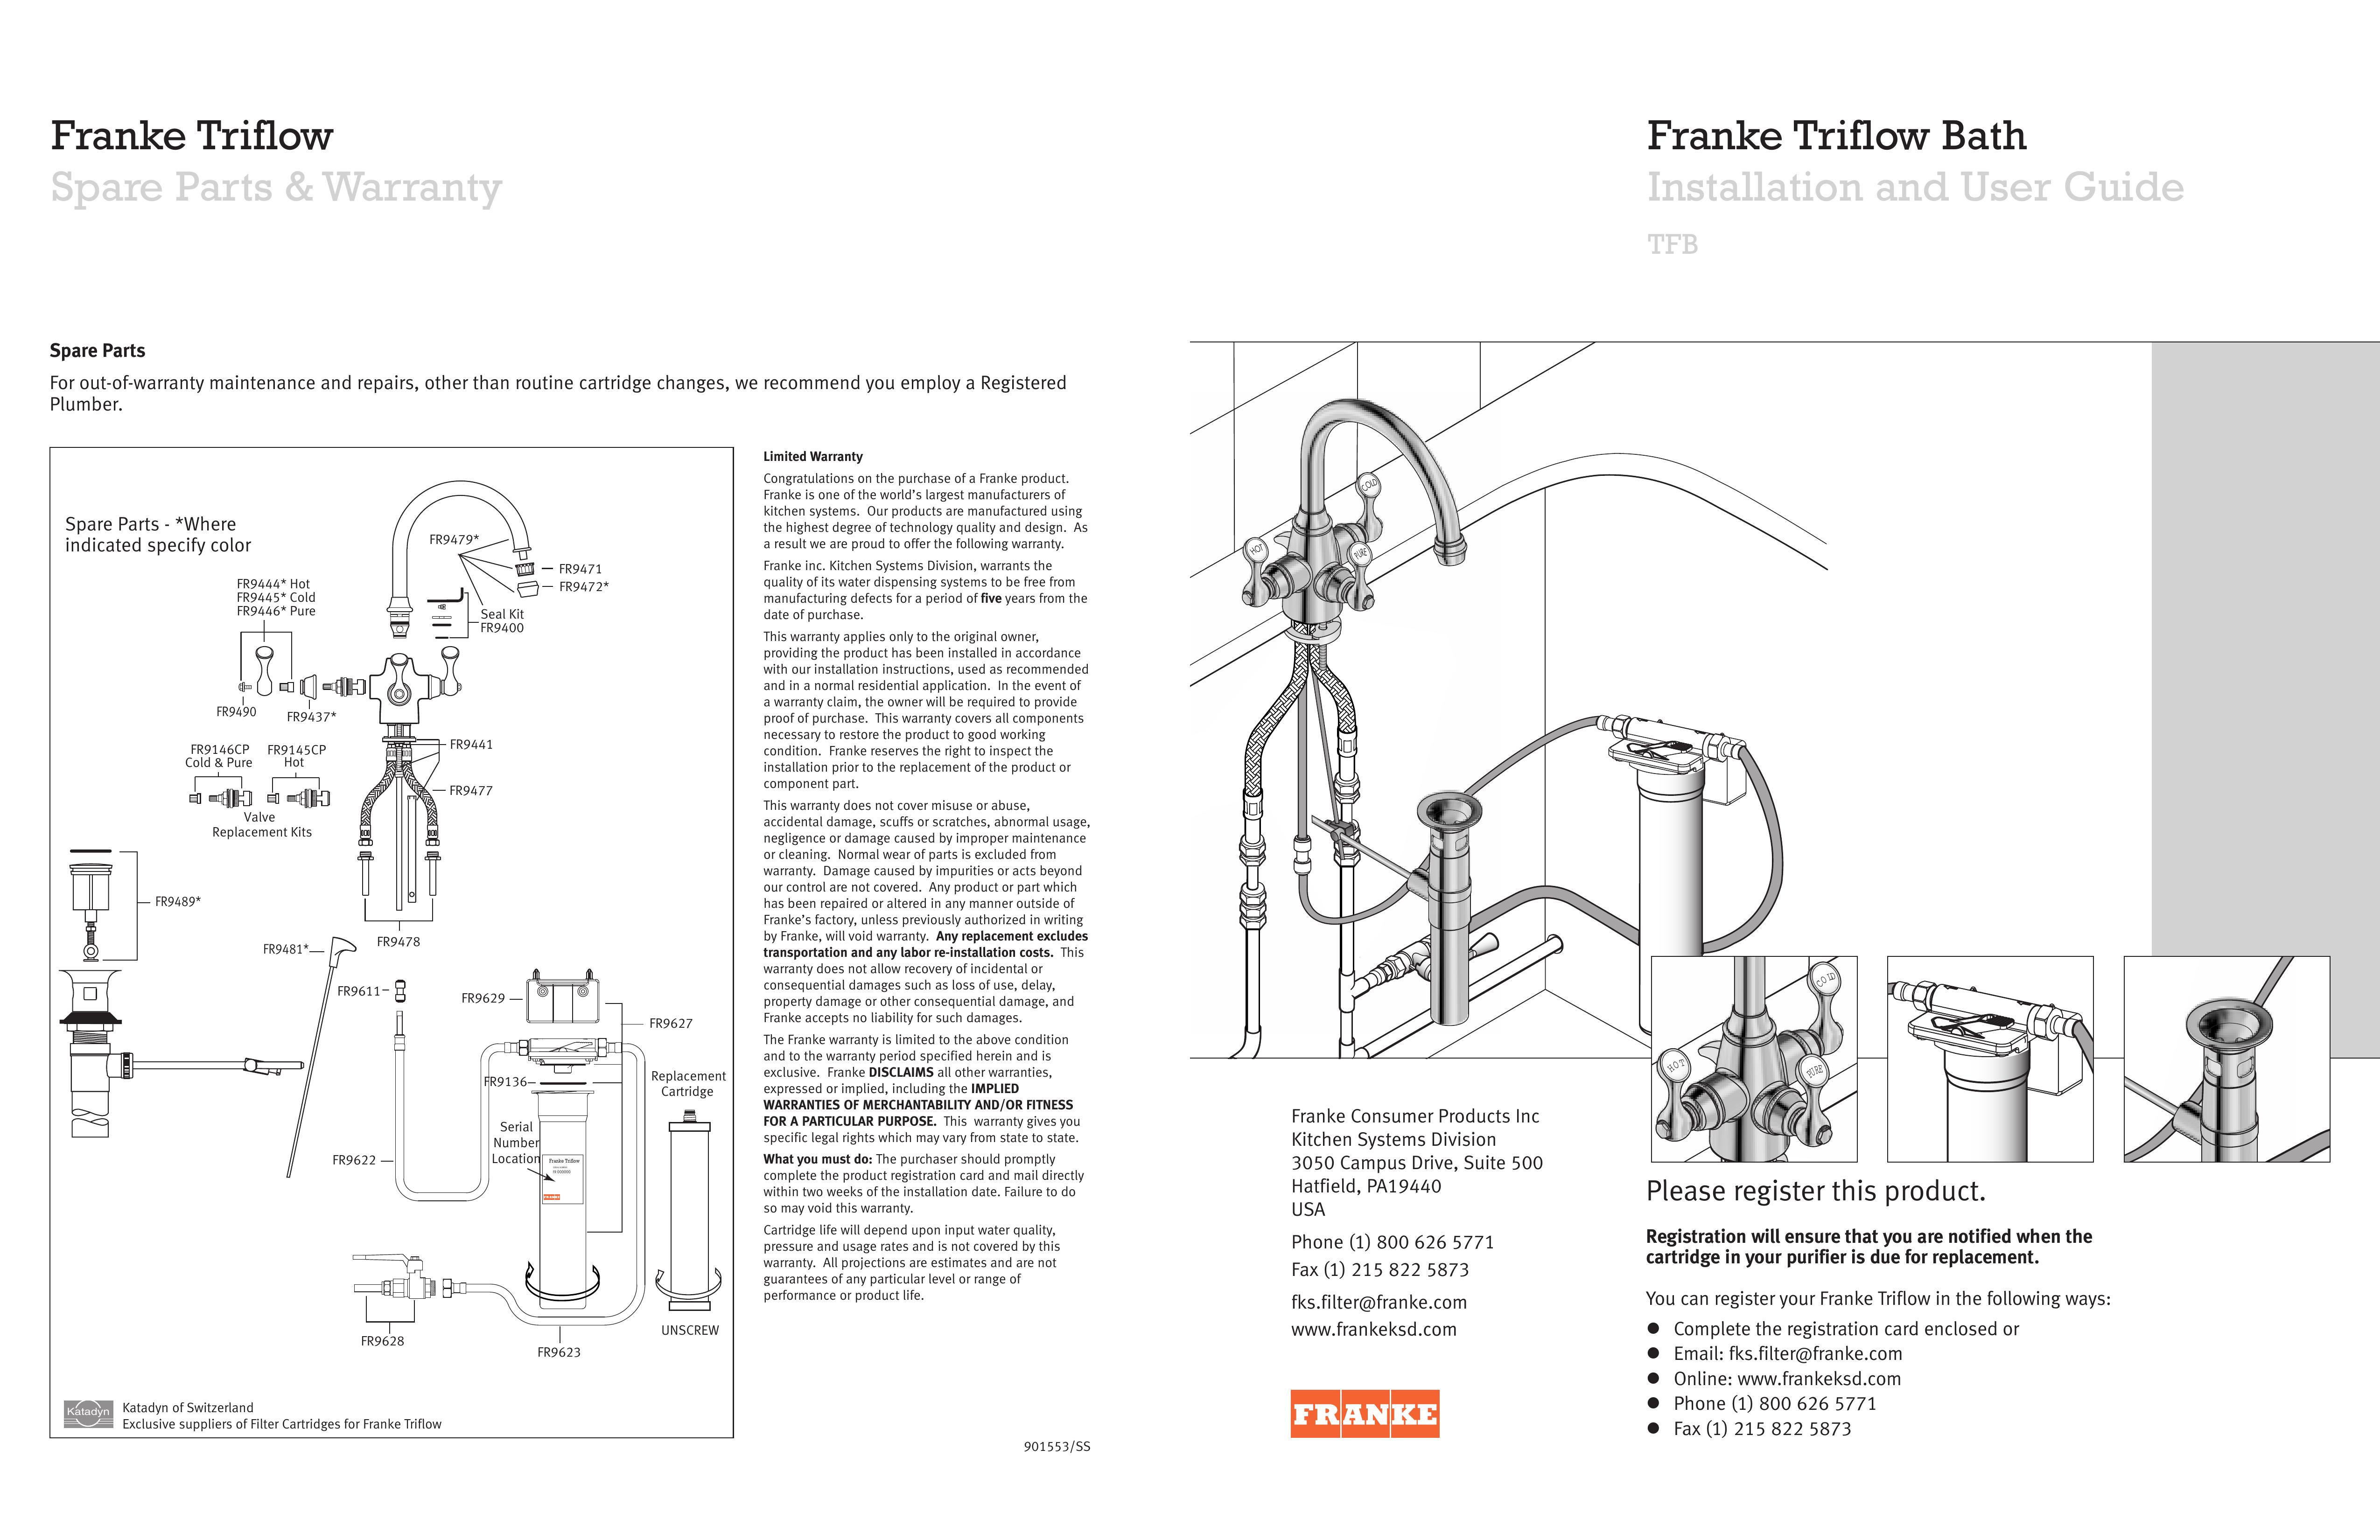 Franke Consumer Products FR9479 Water Dispenser User Manual